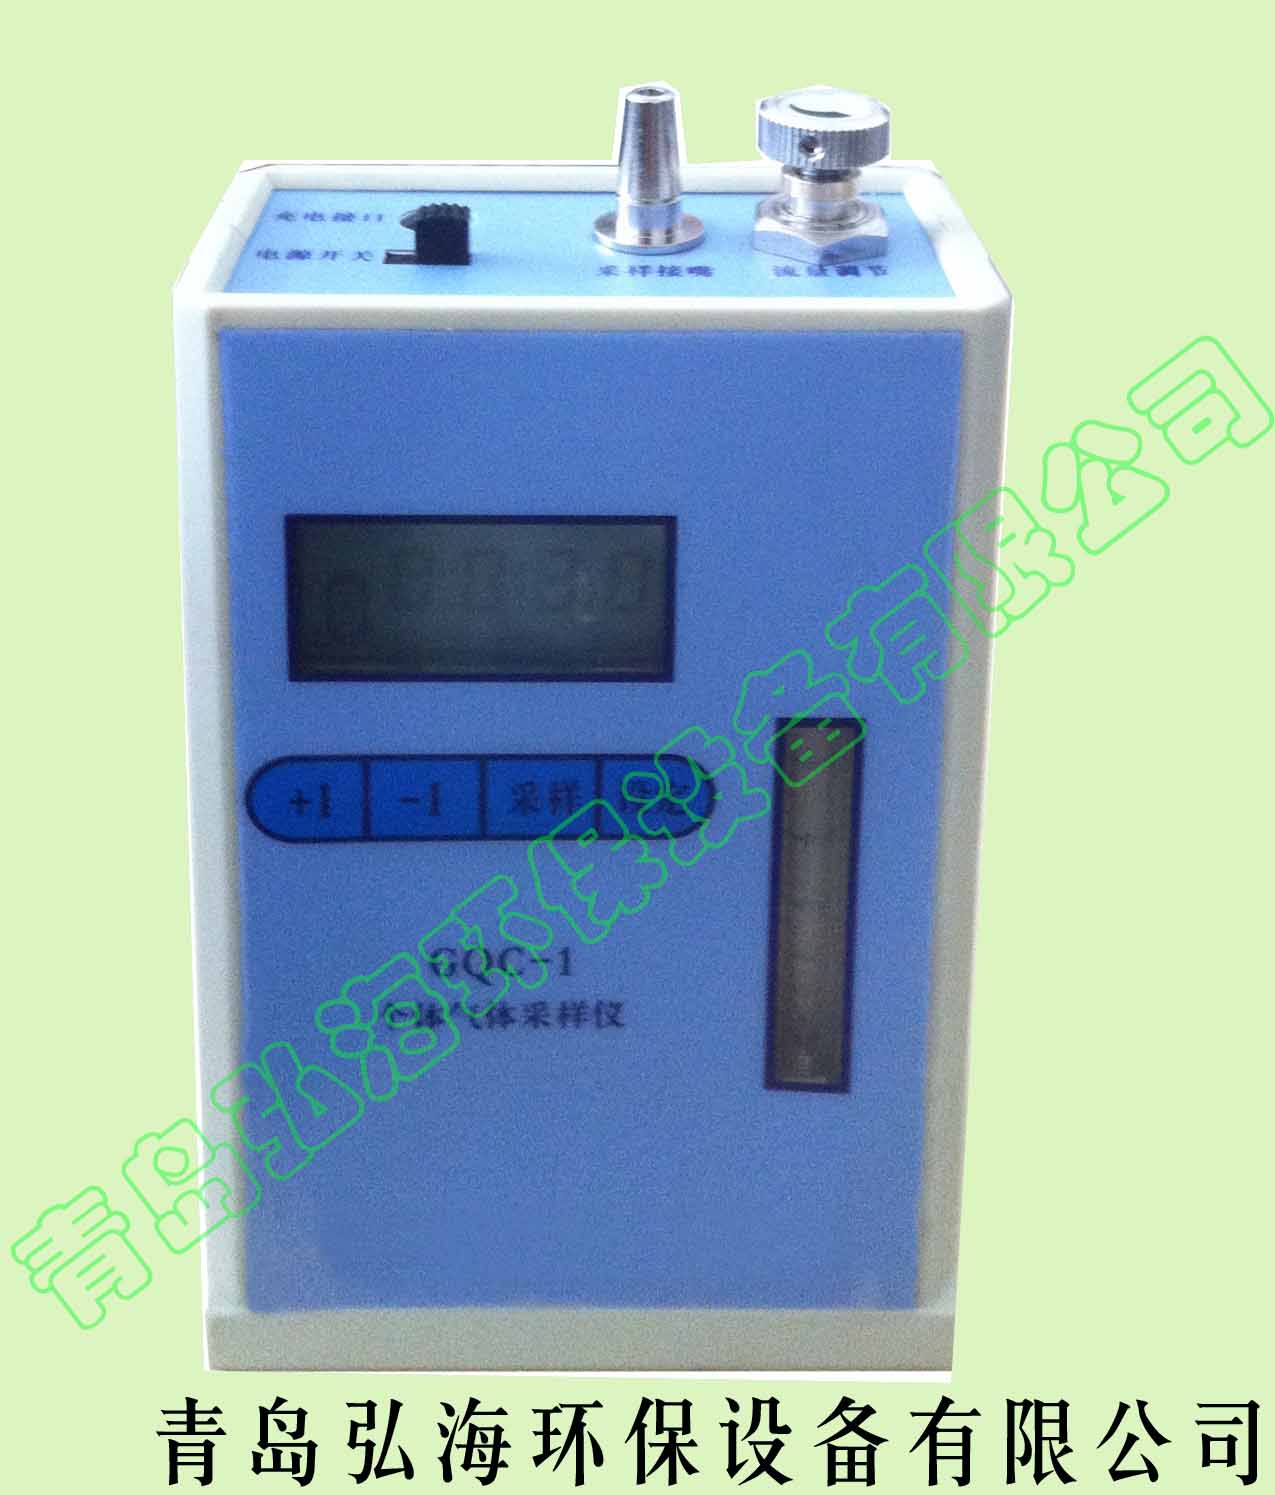 GQC-1个体气体采样仪个人用采样器